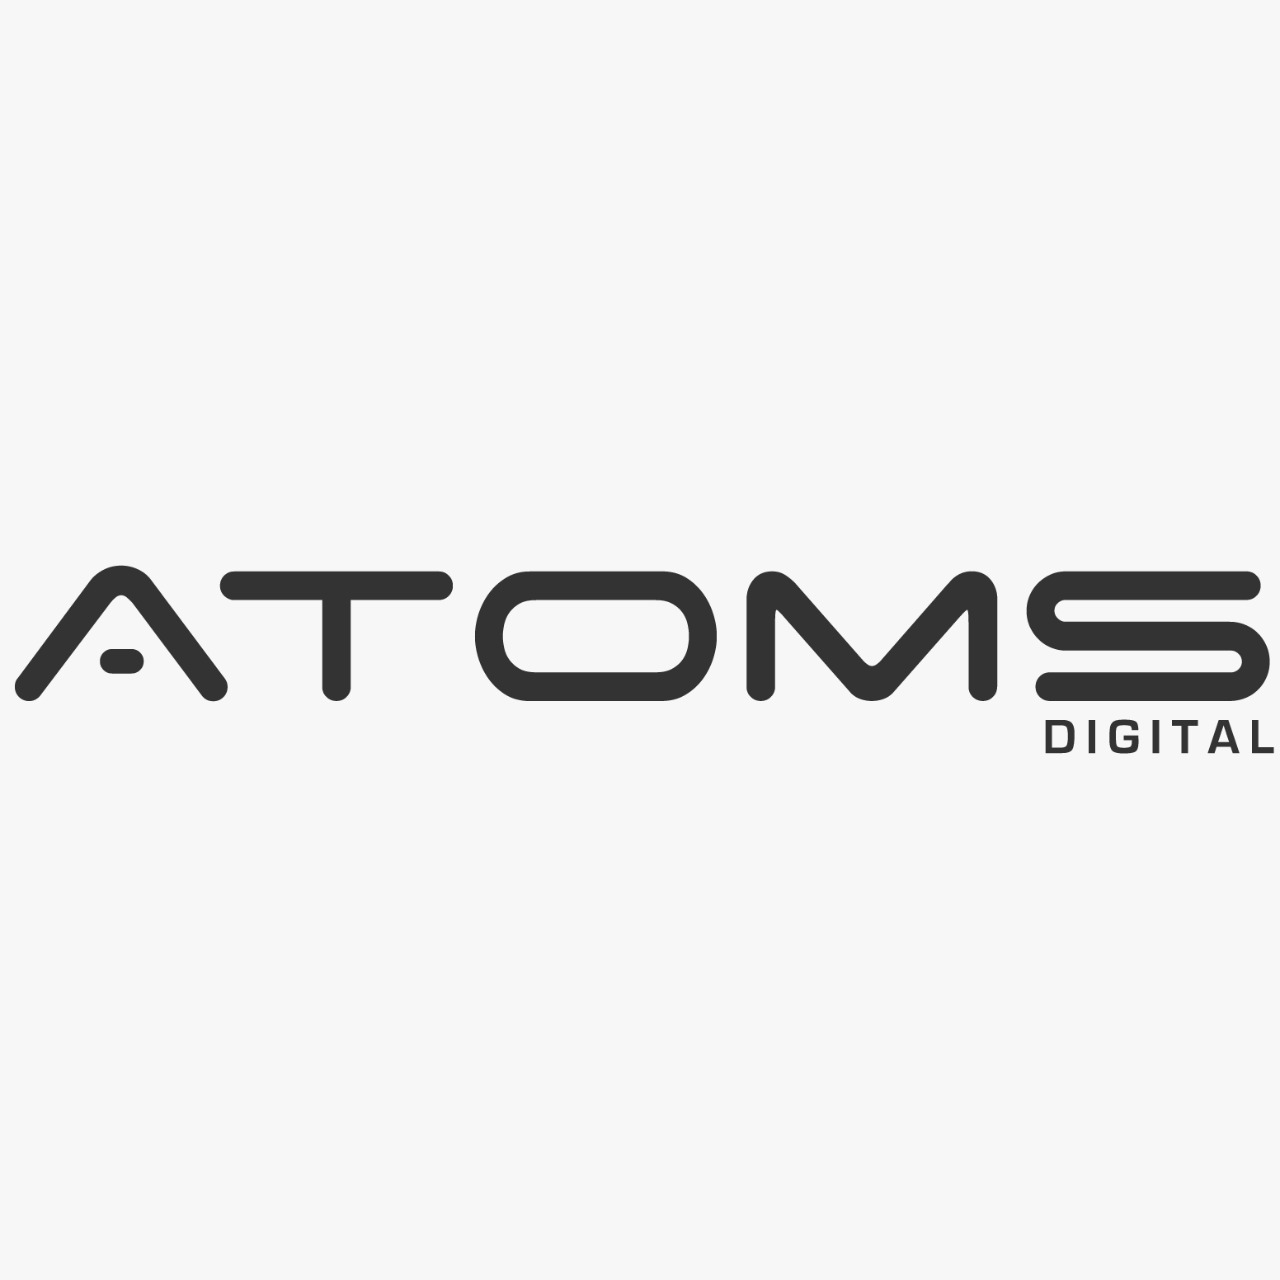 Atoms Digital Marketing Agency